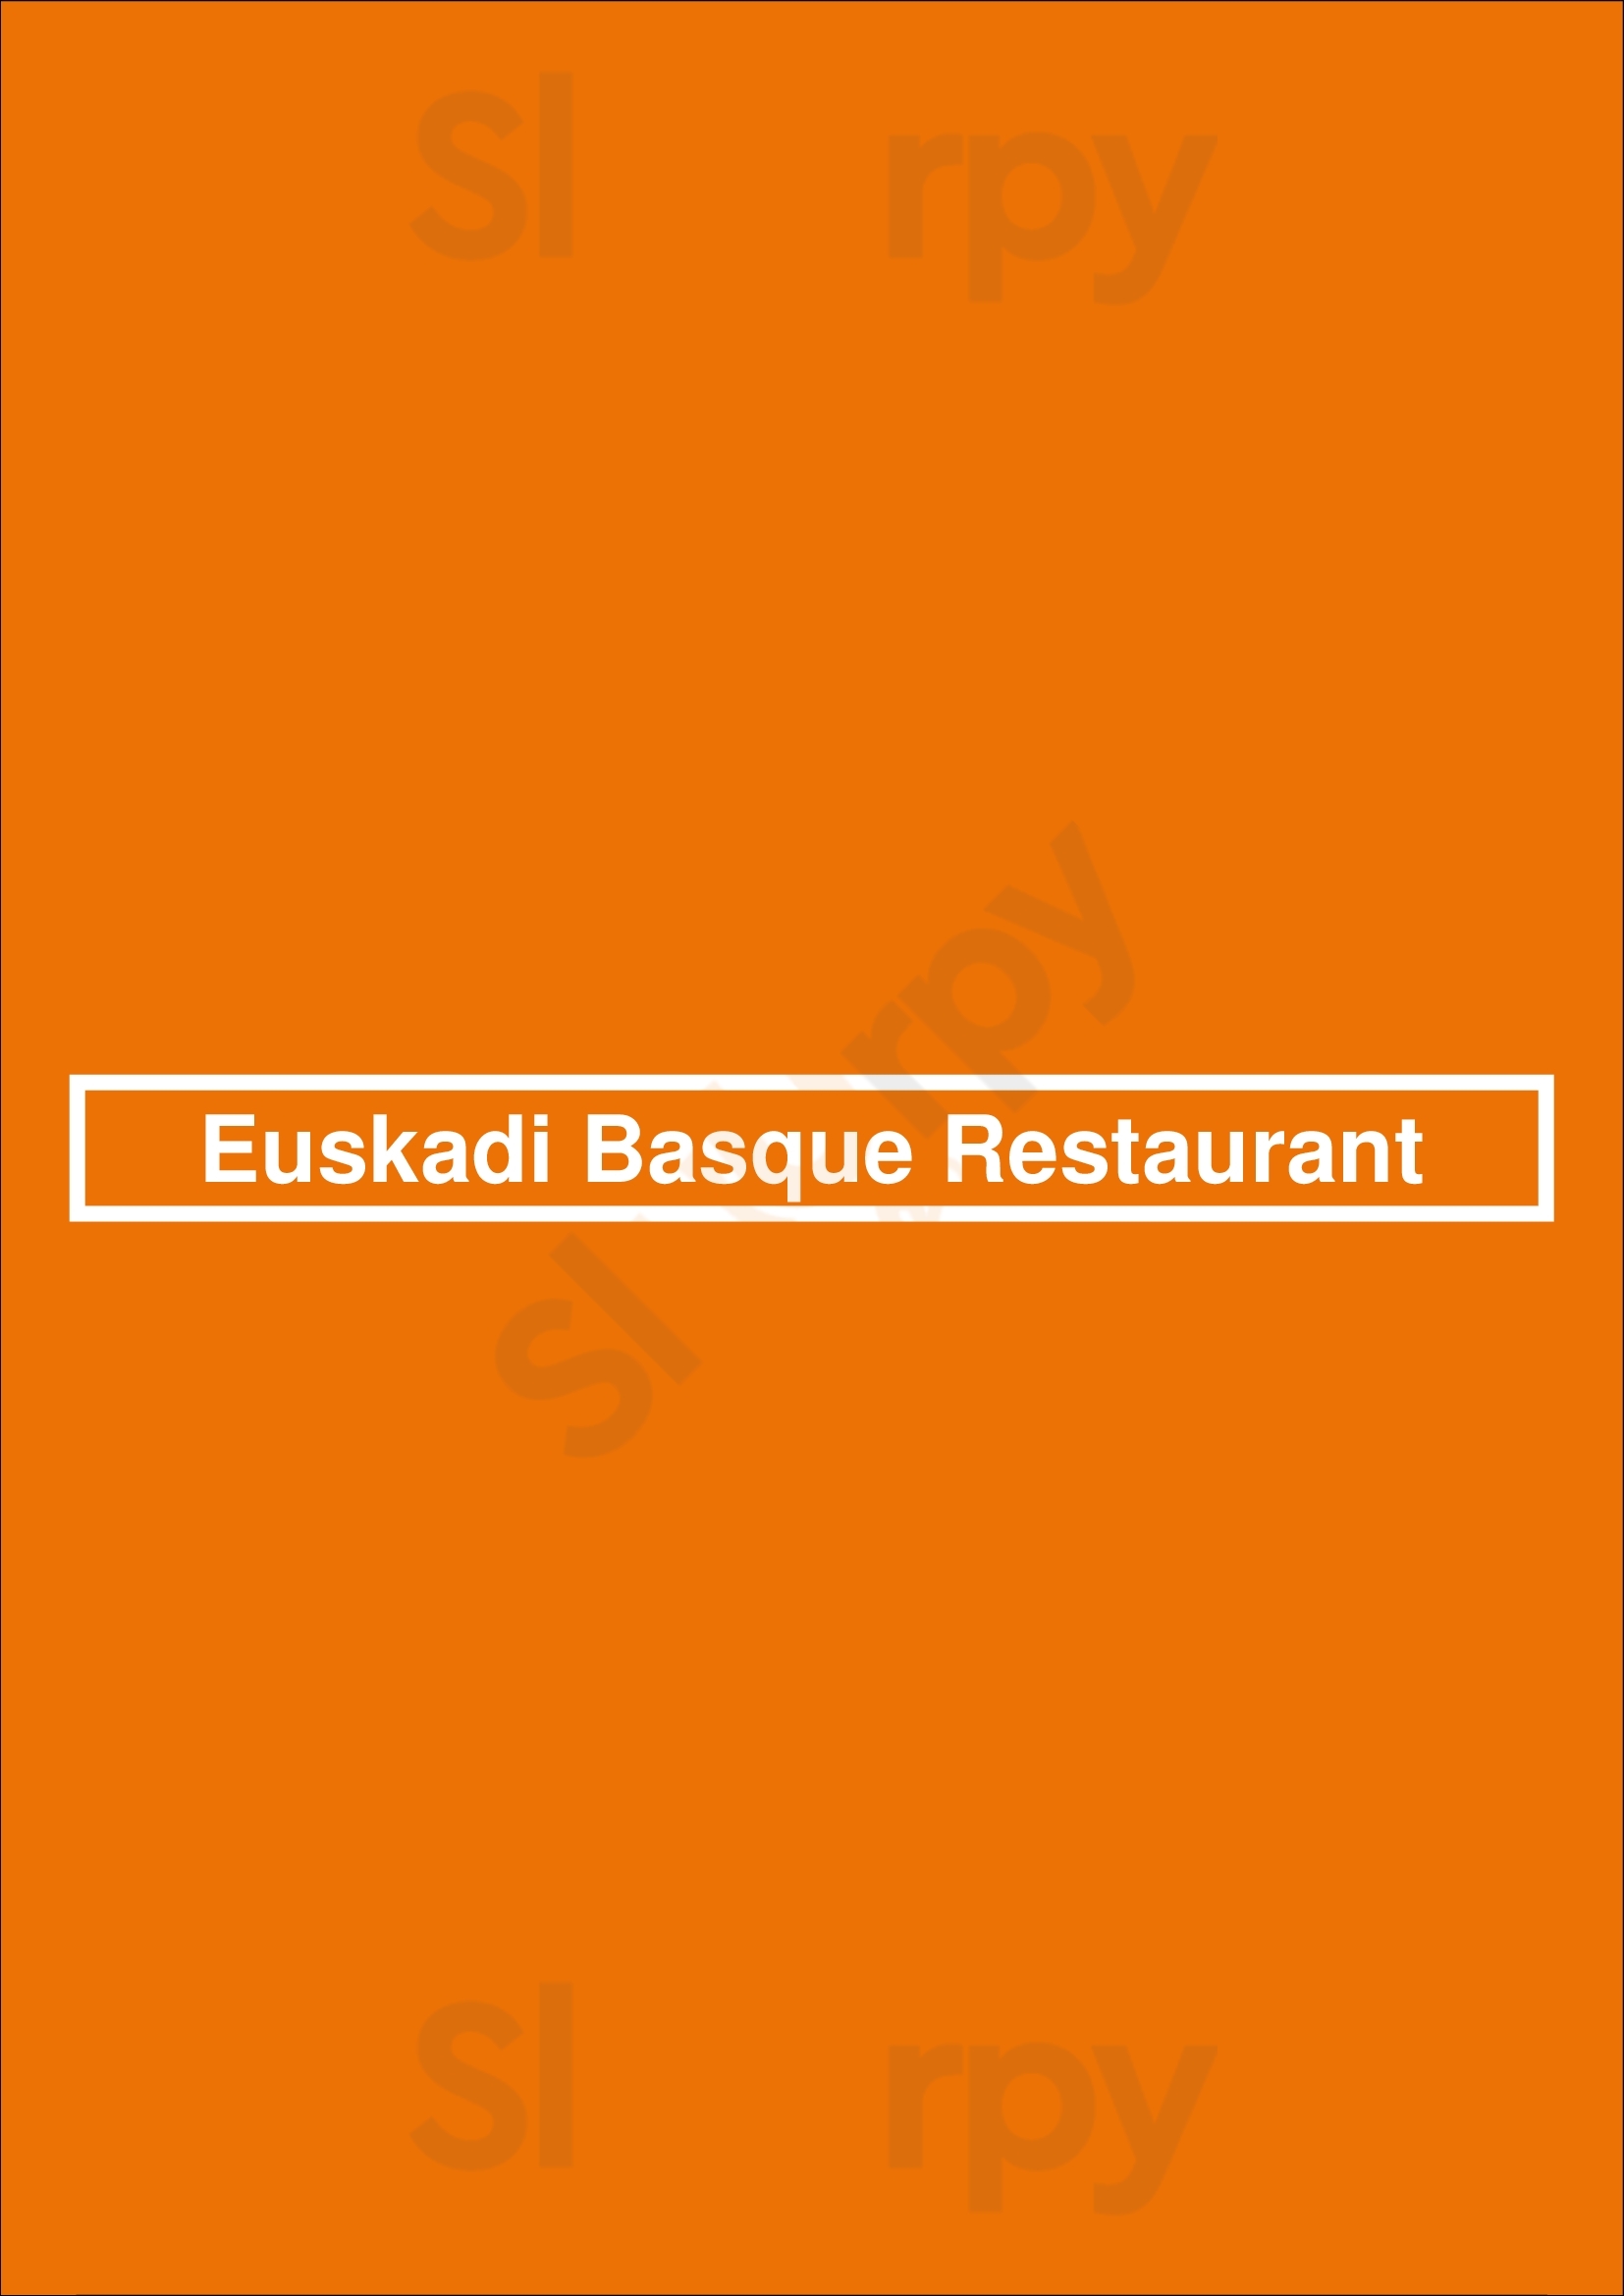 Euskadi Basque Restaurant Rotterdam Menu - 1